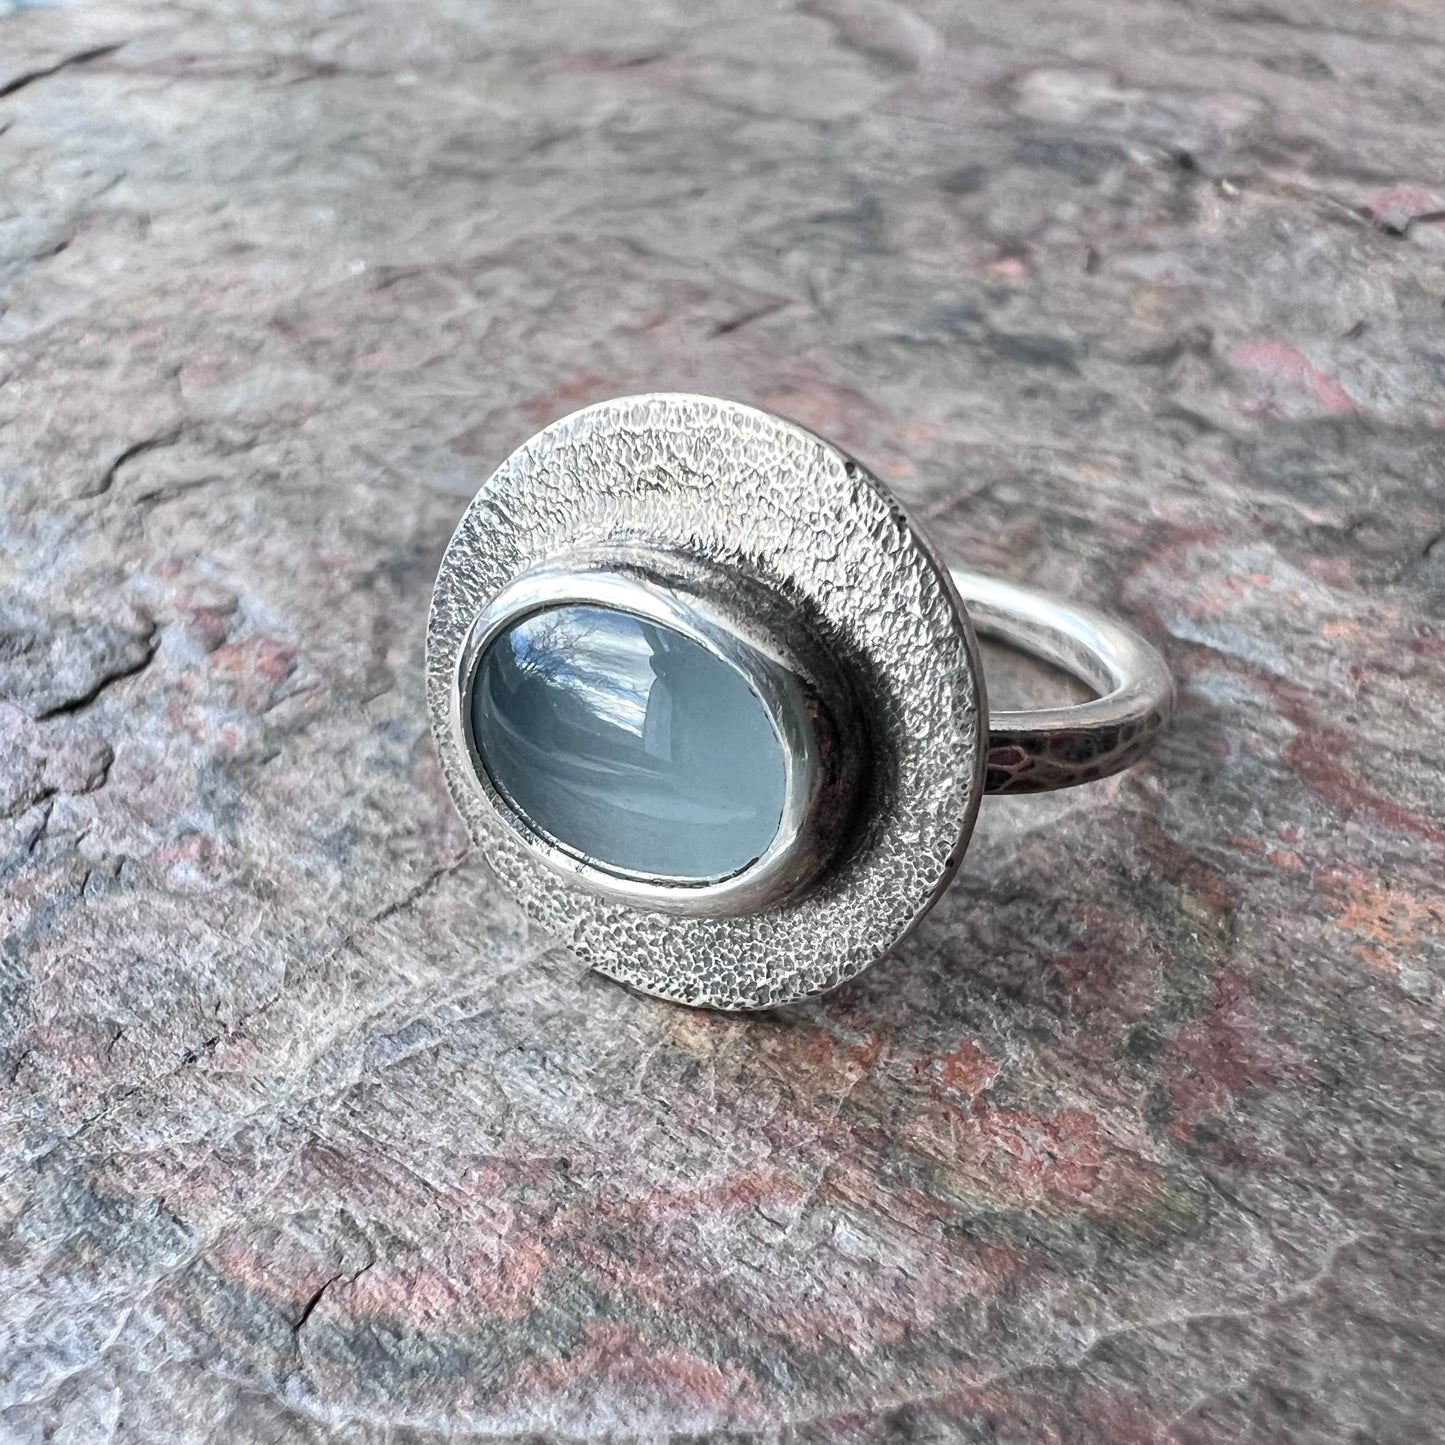 Aquamarine Sterling Silver Ring - Handmade One-of-a-kind Aquamarine Cabochon Ring